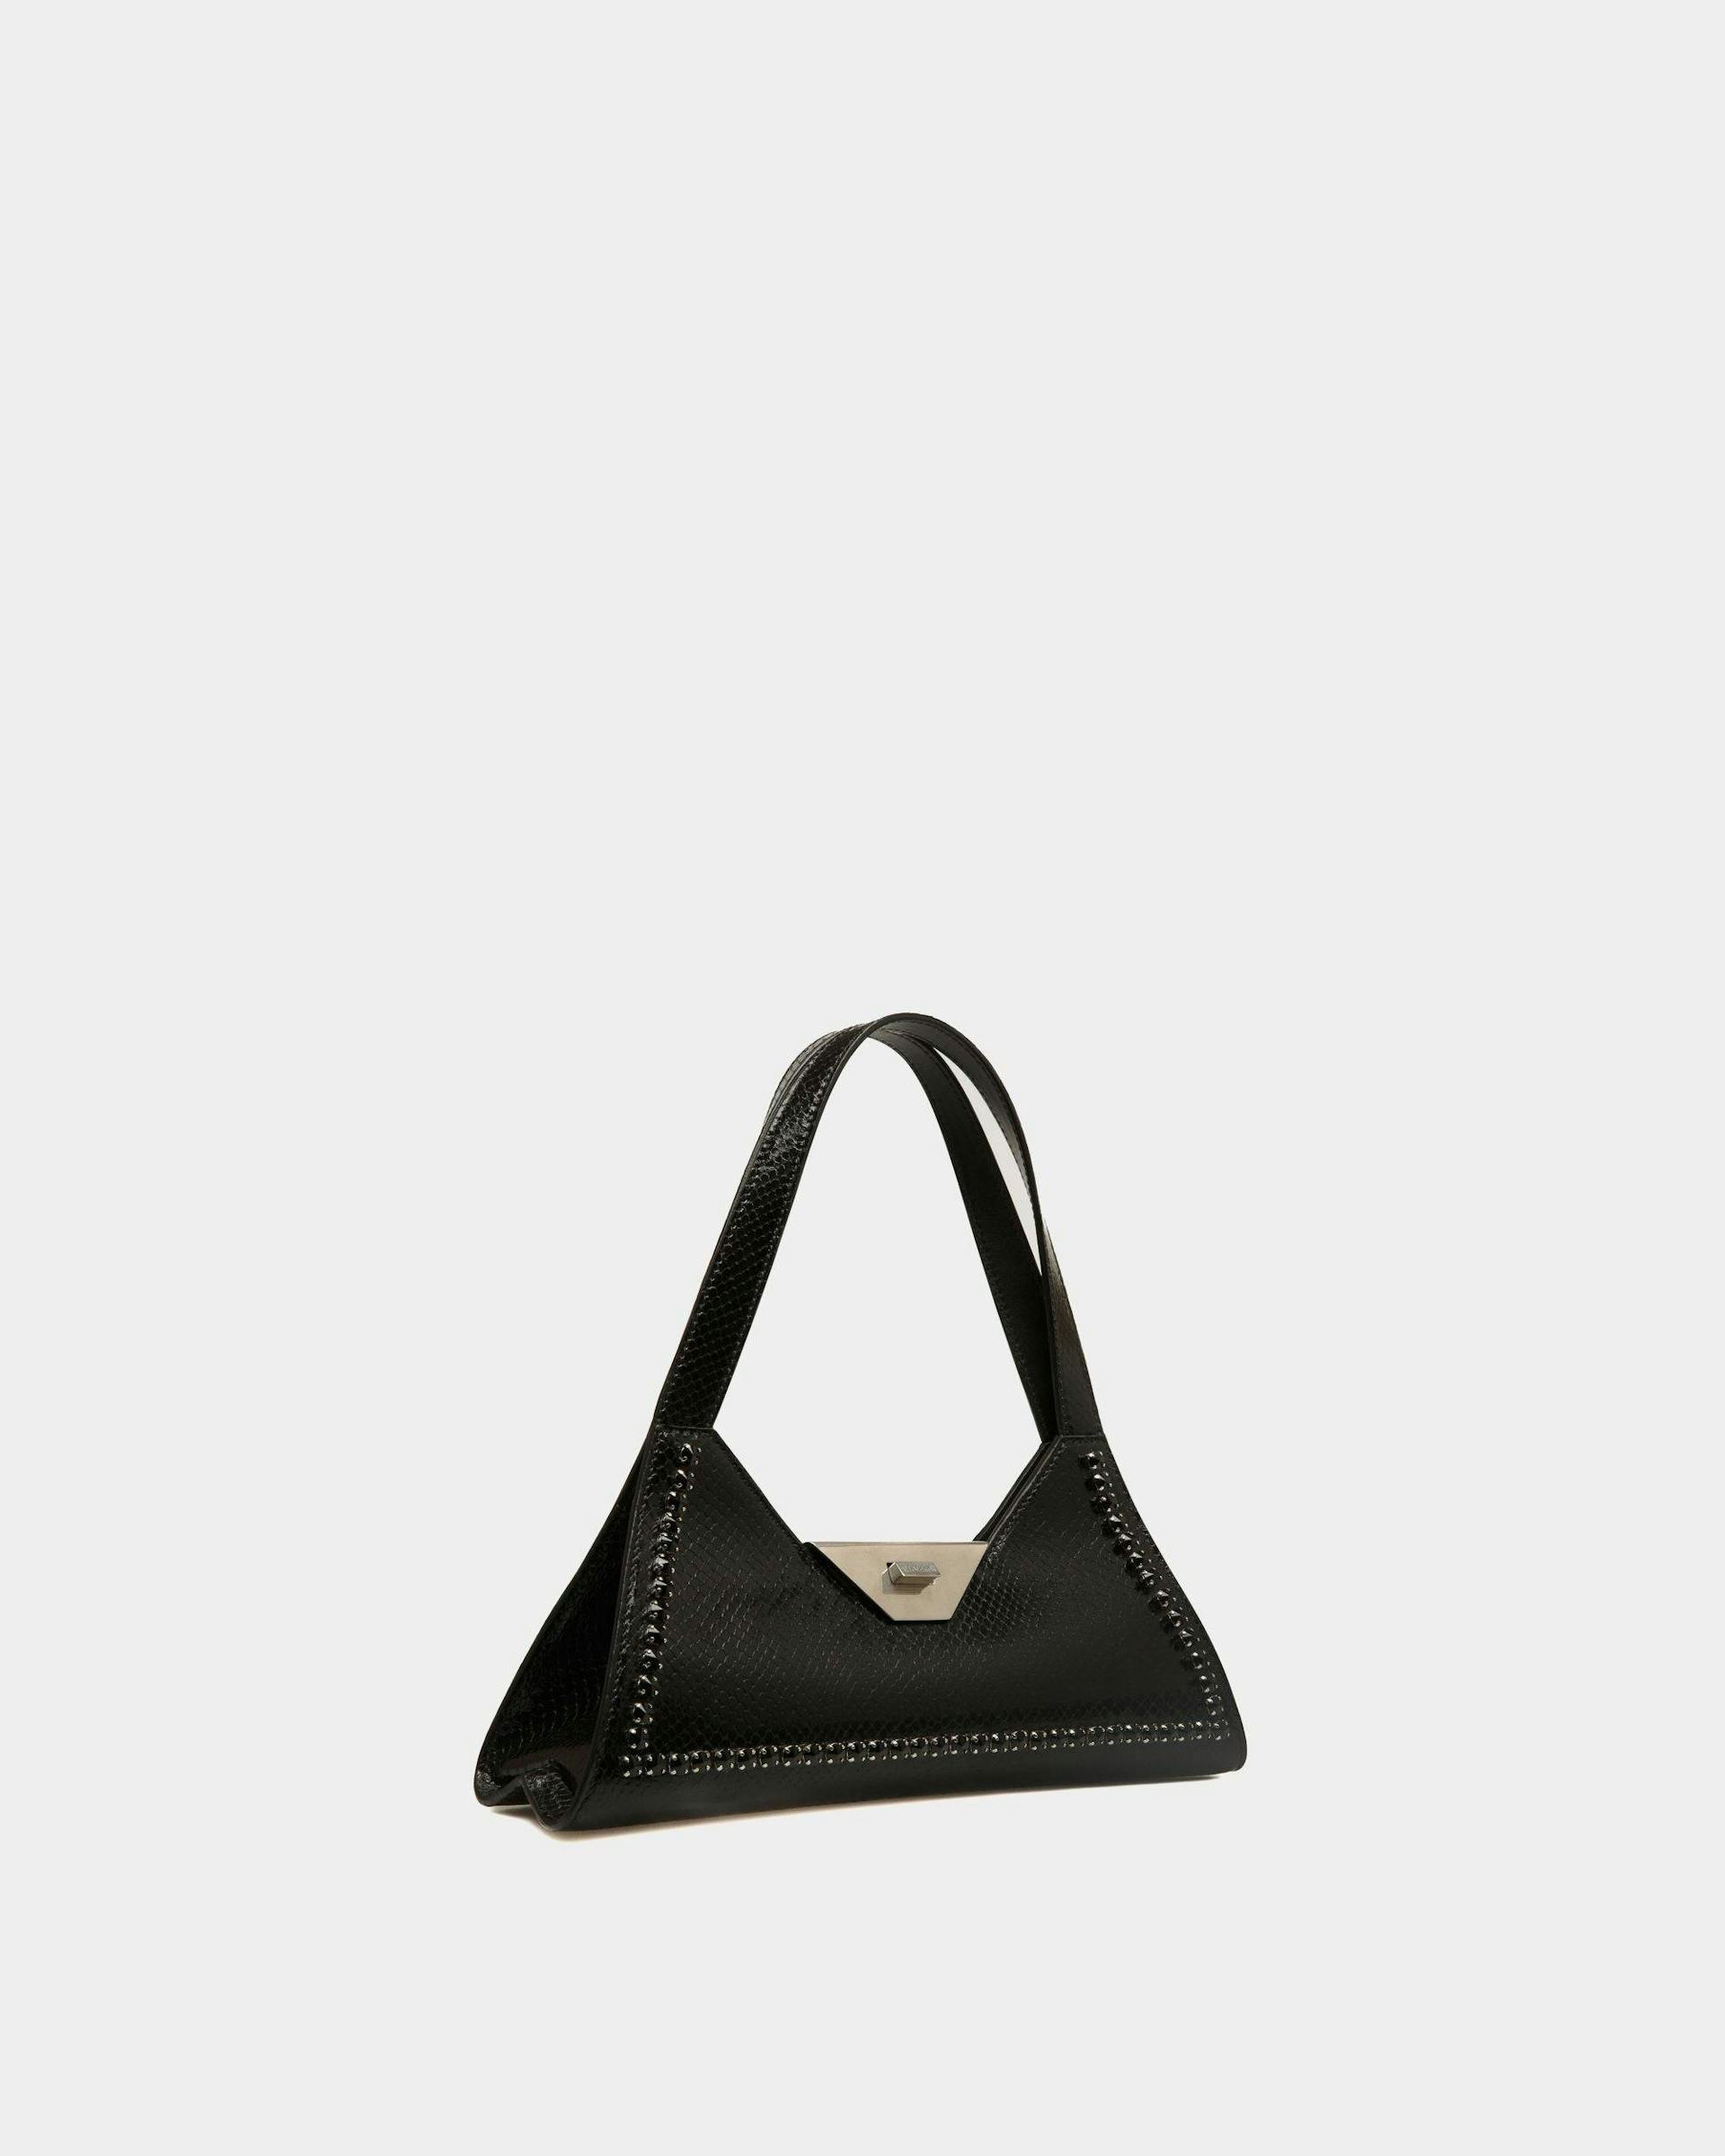 Women's Tilt Small Shoulder Bag in Black Python Printed Leather | Bally | Still Life 3/4 Front